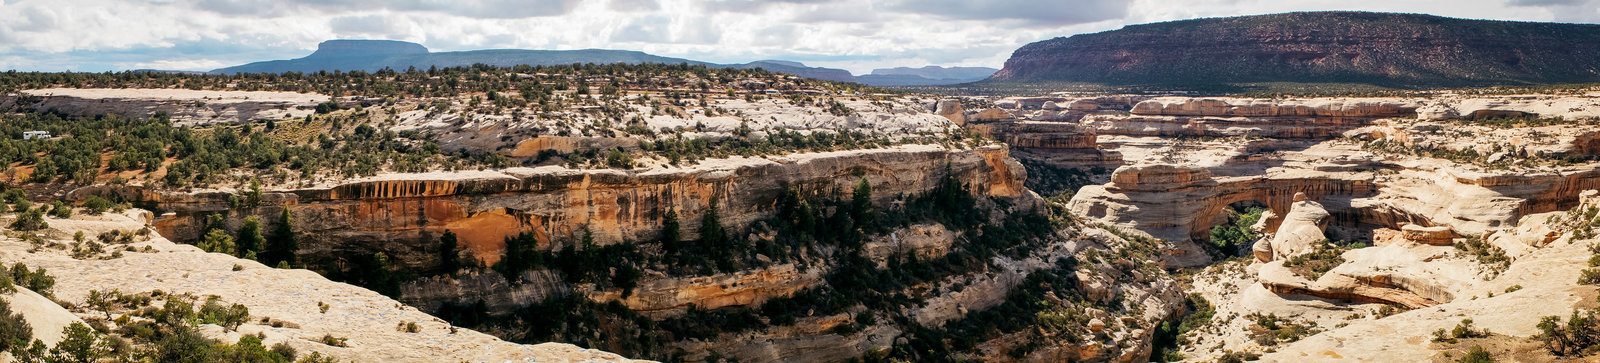 Sasha_Reiko_Photography_Travel_Utah_Arches_Canyon_Lands_Zion_Grand_Canyon-7